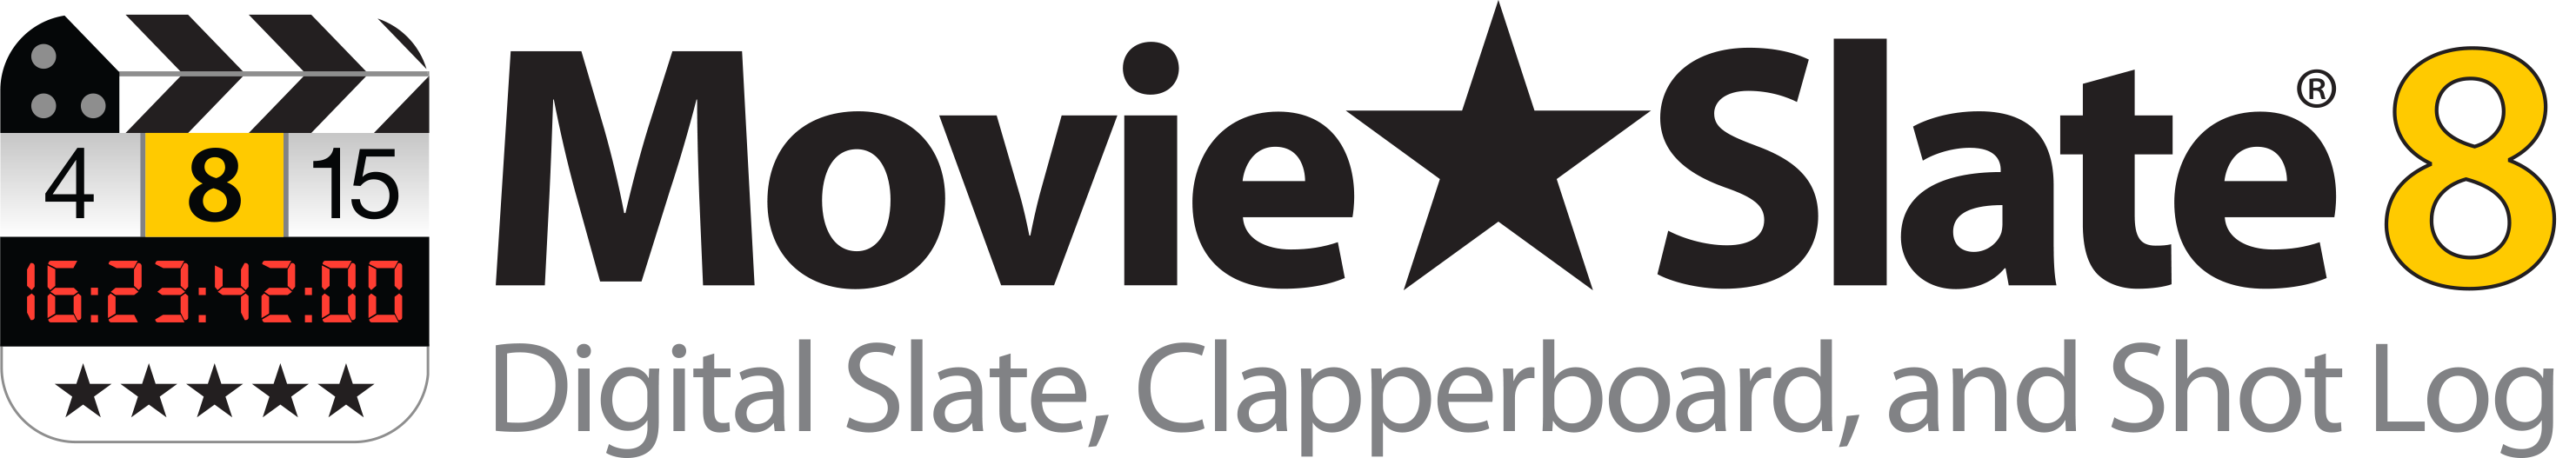 Image: MovieSlate 8 Logo on white